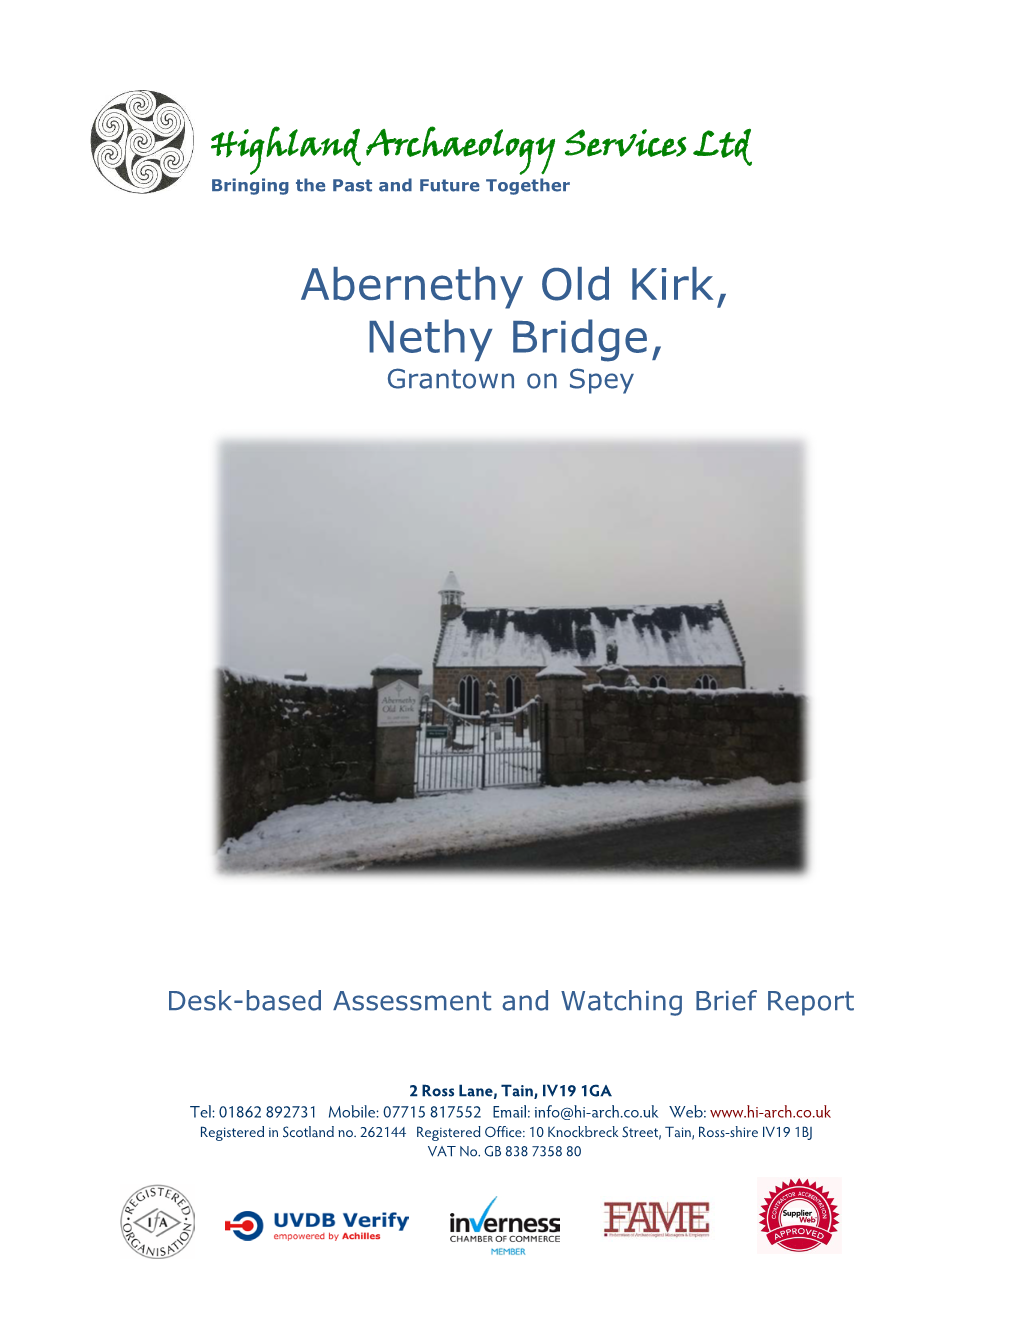 Abernethy Old Kirk, Nethy Bridge, Grantown on Spey